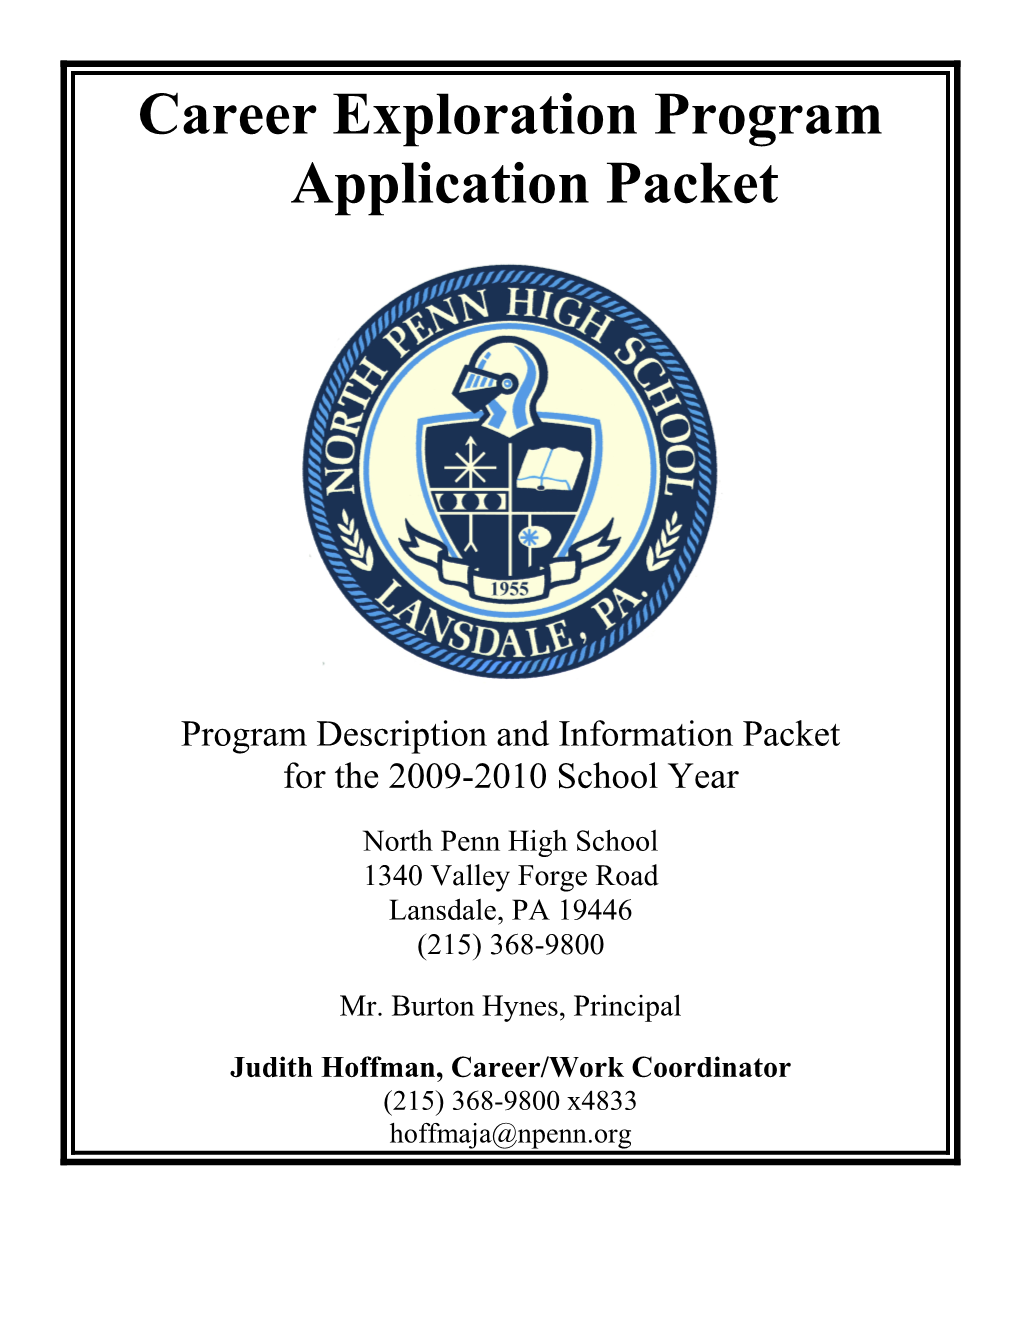 Career Exploration Program Application Packet